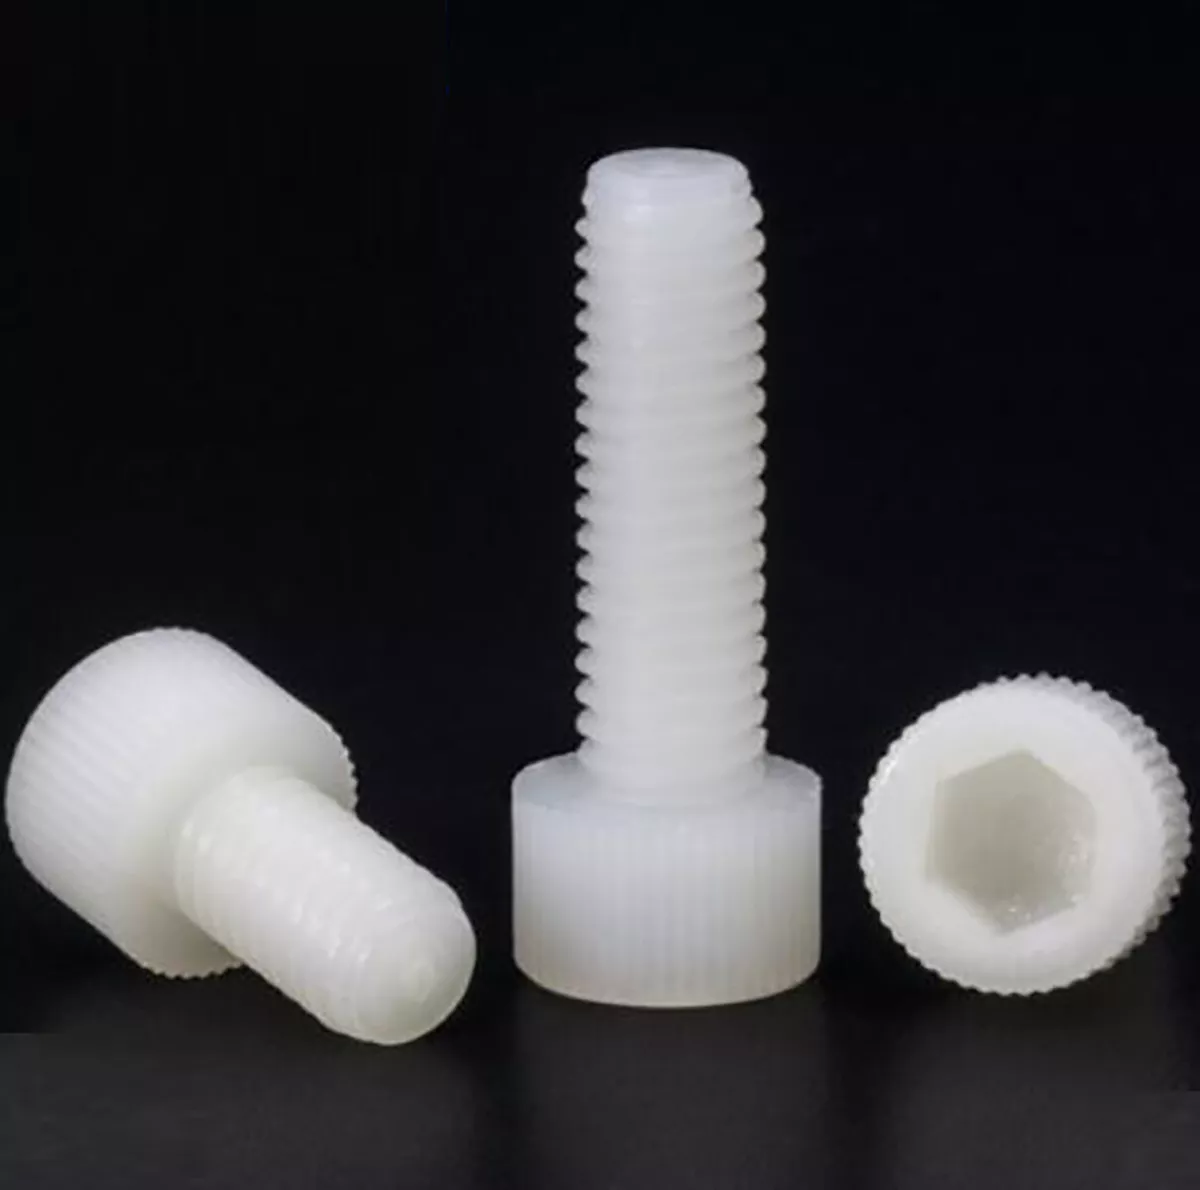 Plastic cylinder screws inner hex white nylon DIN 912 M3 M4 M5 M6 M8